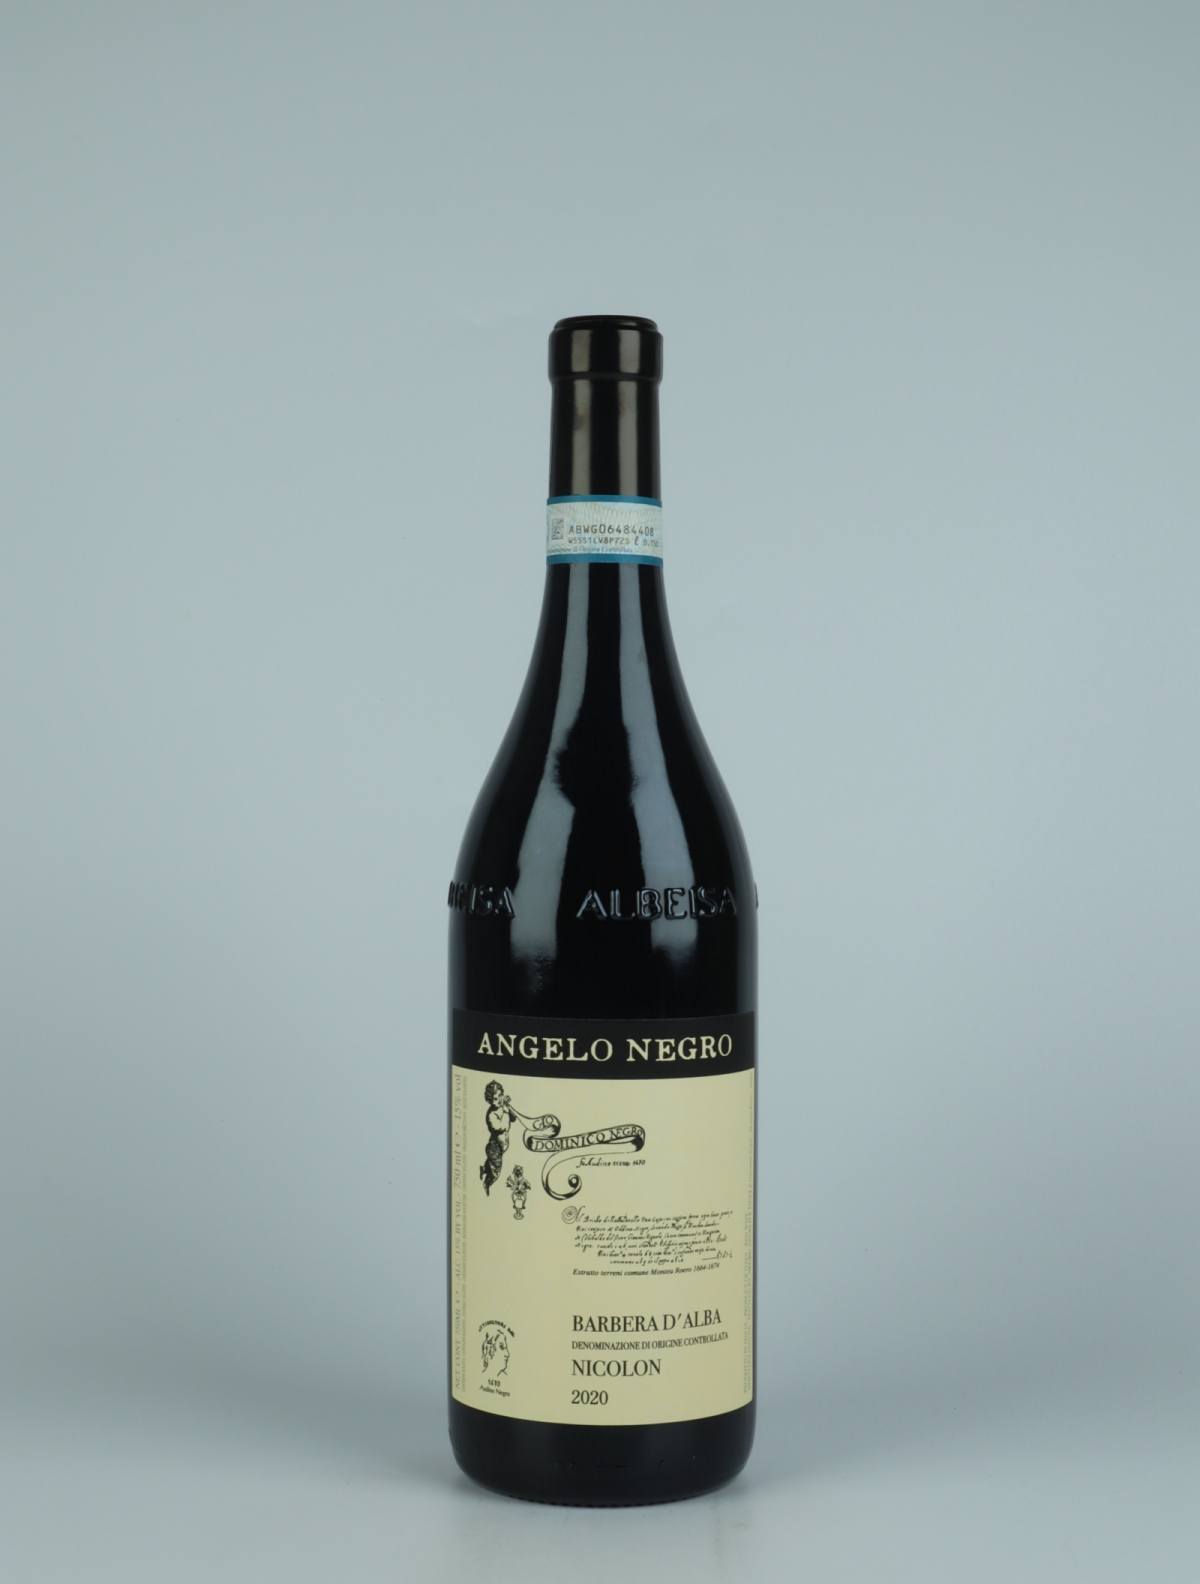 En flaske 2020 Barbera d'Alba - Nicolon Rødvin fra Angelo Negro, Piemonte i Italien